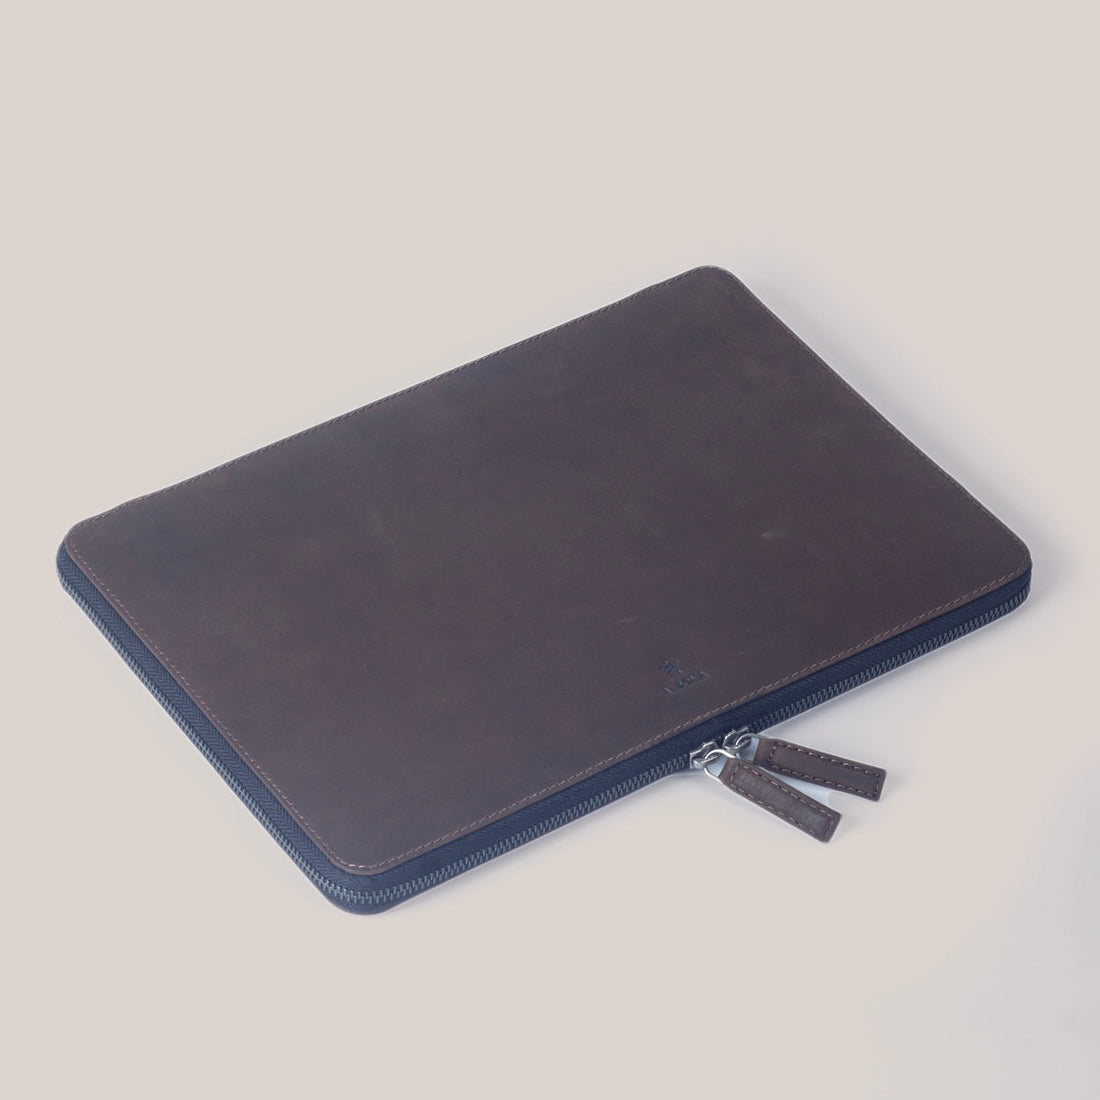 MacBook Air 13 Zippered Laptop Case - Vintage Tan